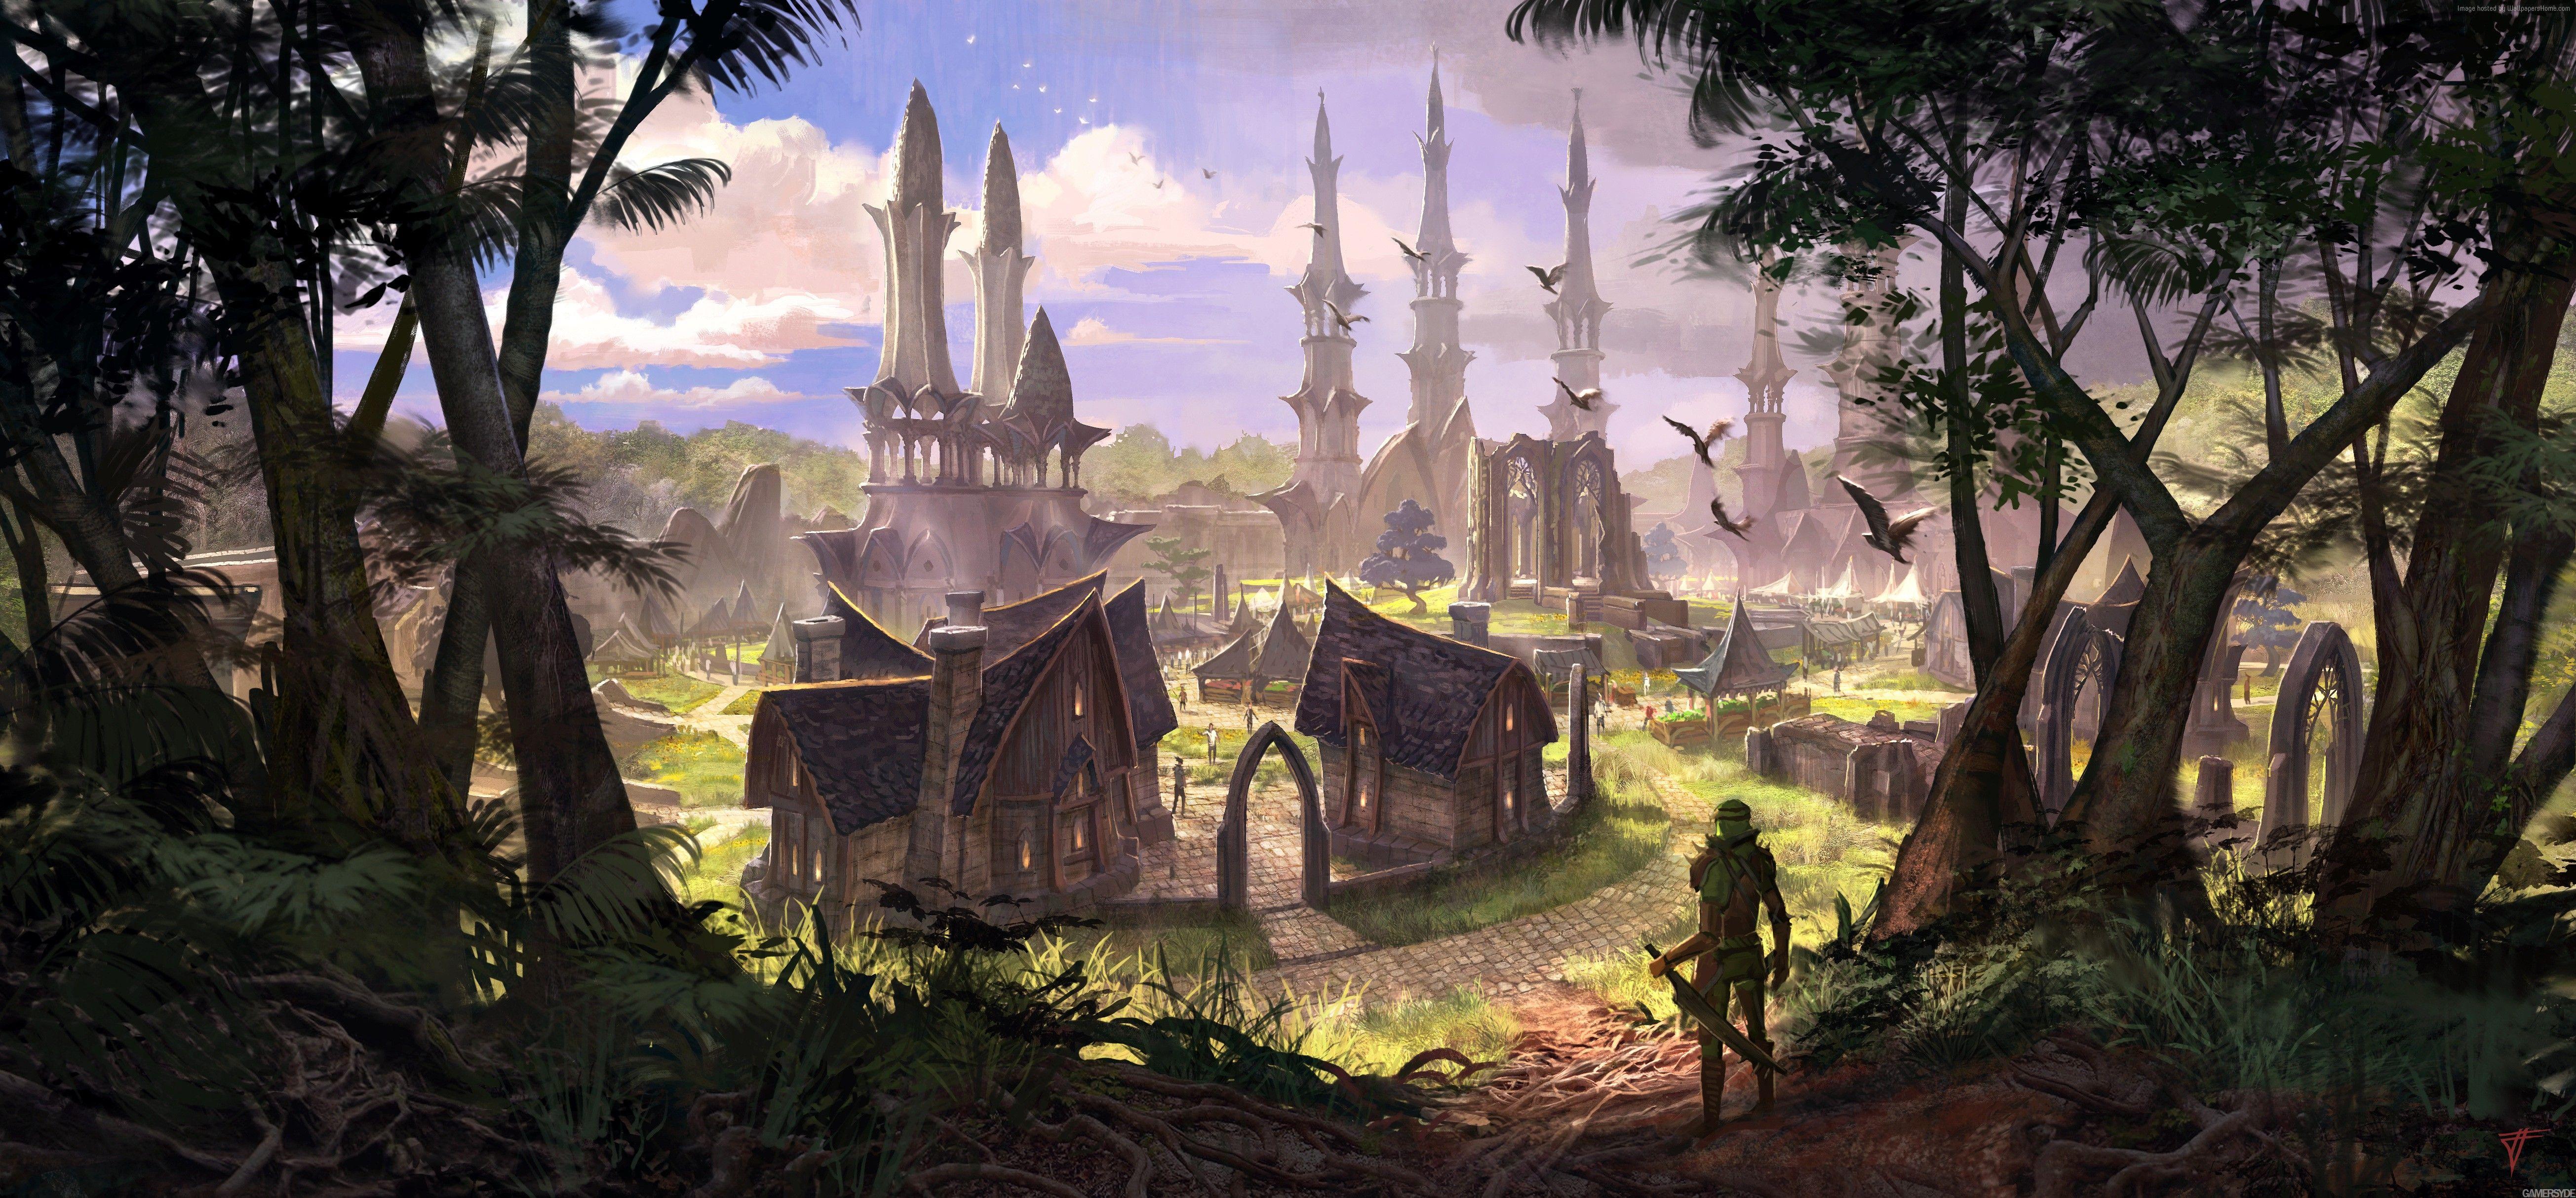 Wallpaper The Elder Scrolls Online, game, mmorpg, forest, tree